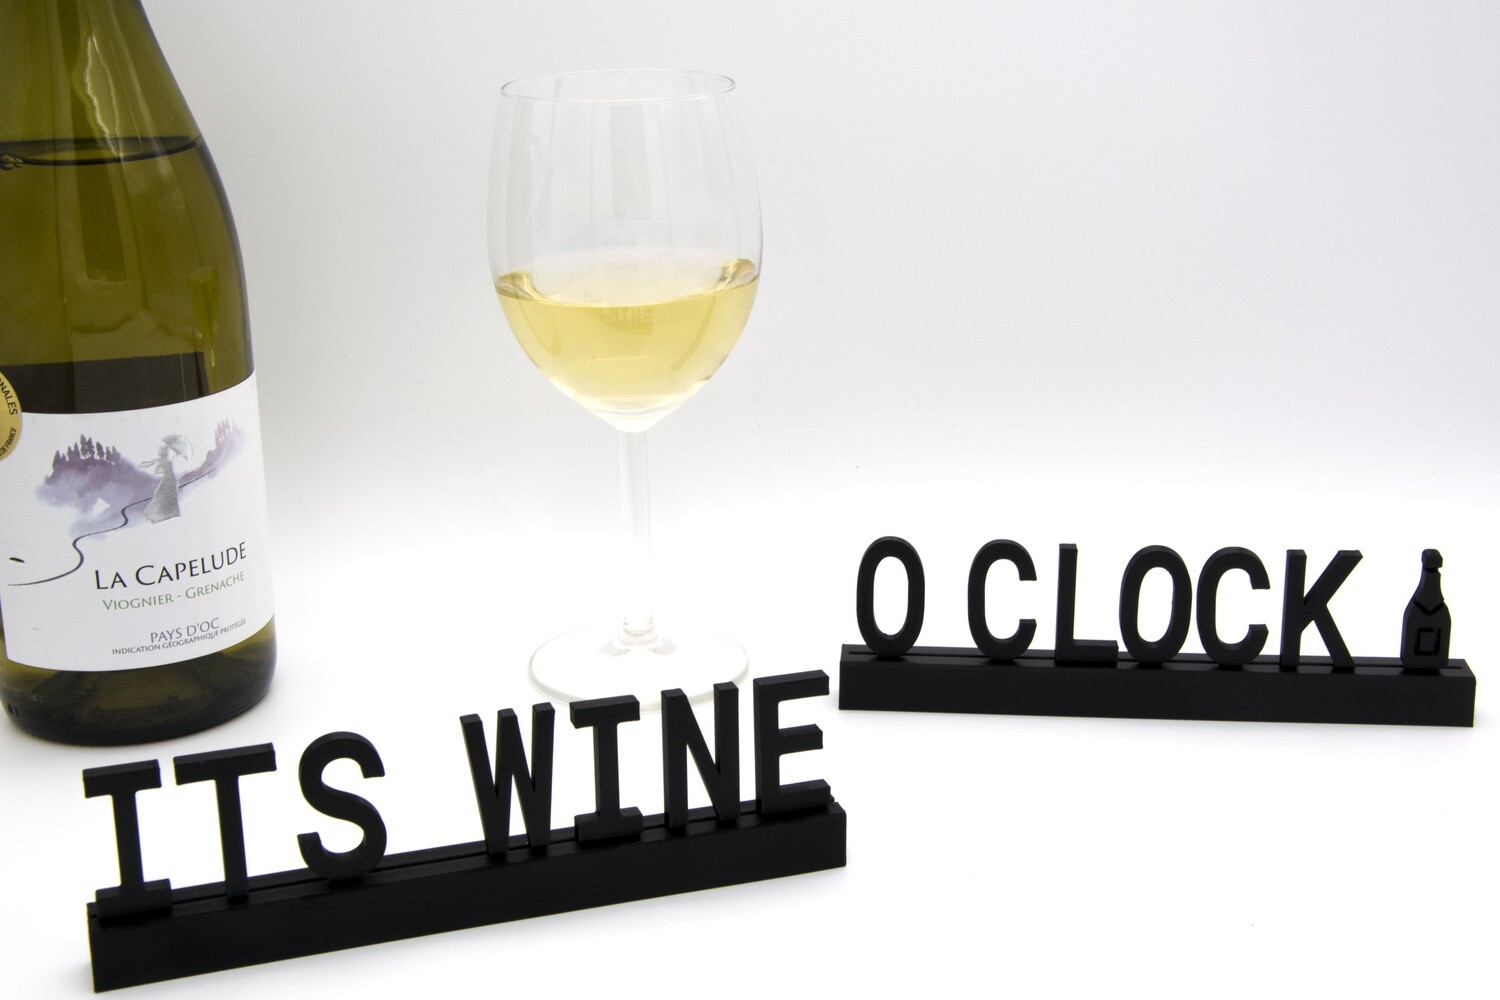 "It's wine o 'clock"